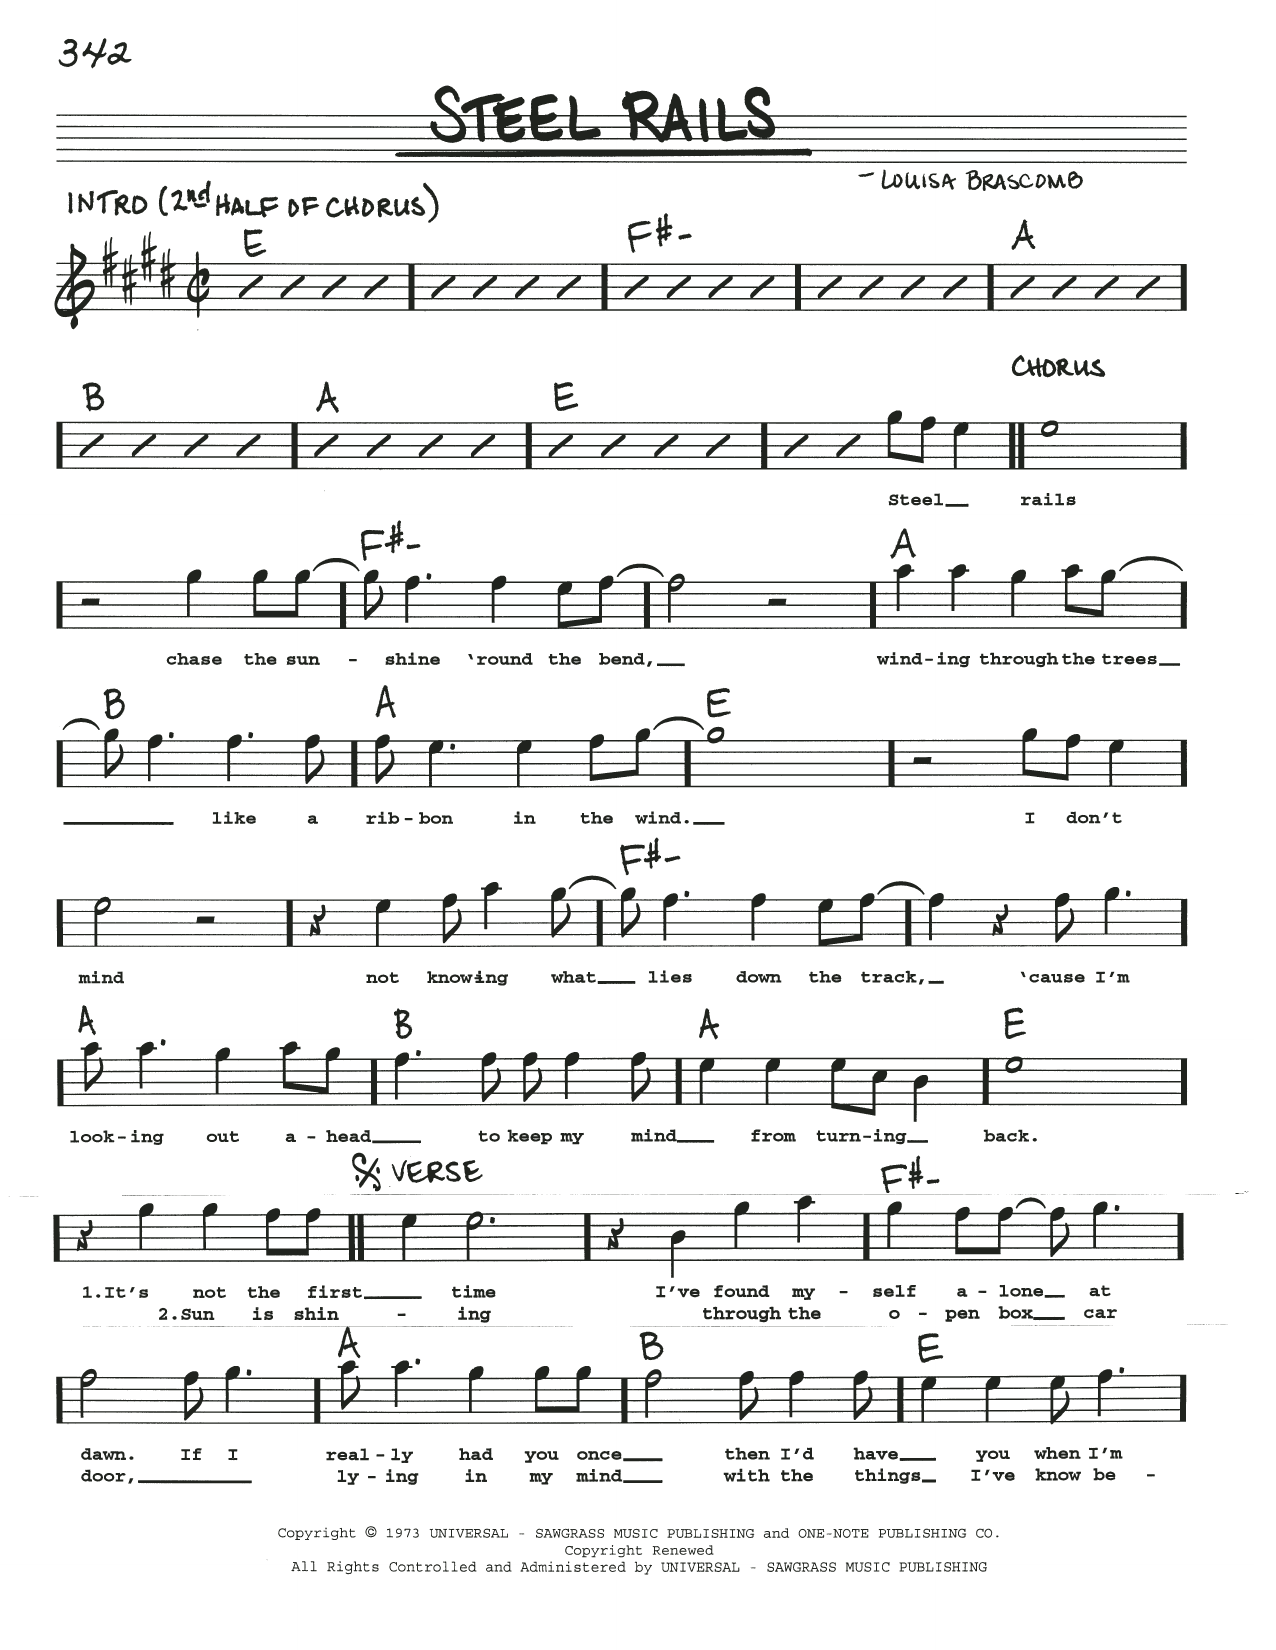 John Denver Steel Rails Sheet Music Notes & Chords for Real Book – Melody, Lyrics & Chords - Download or Print PDF